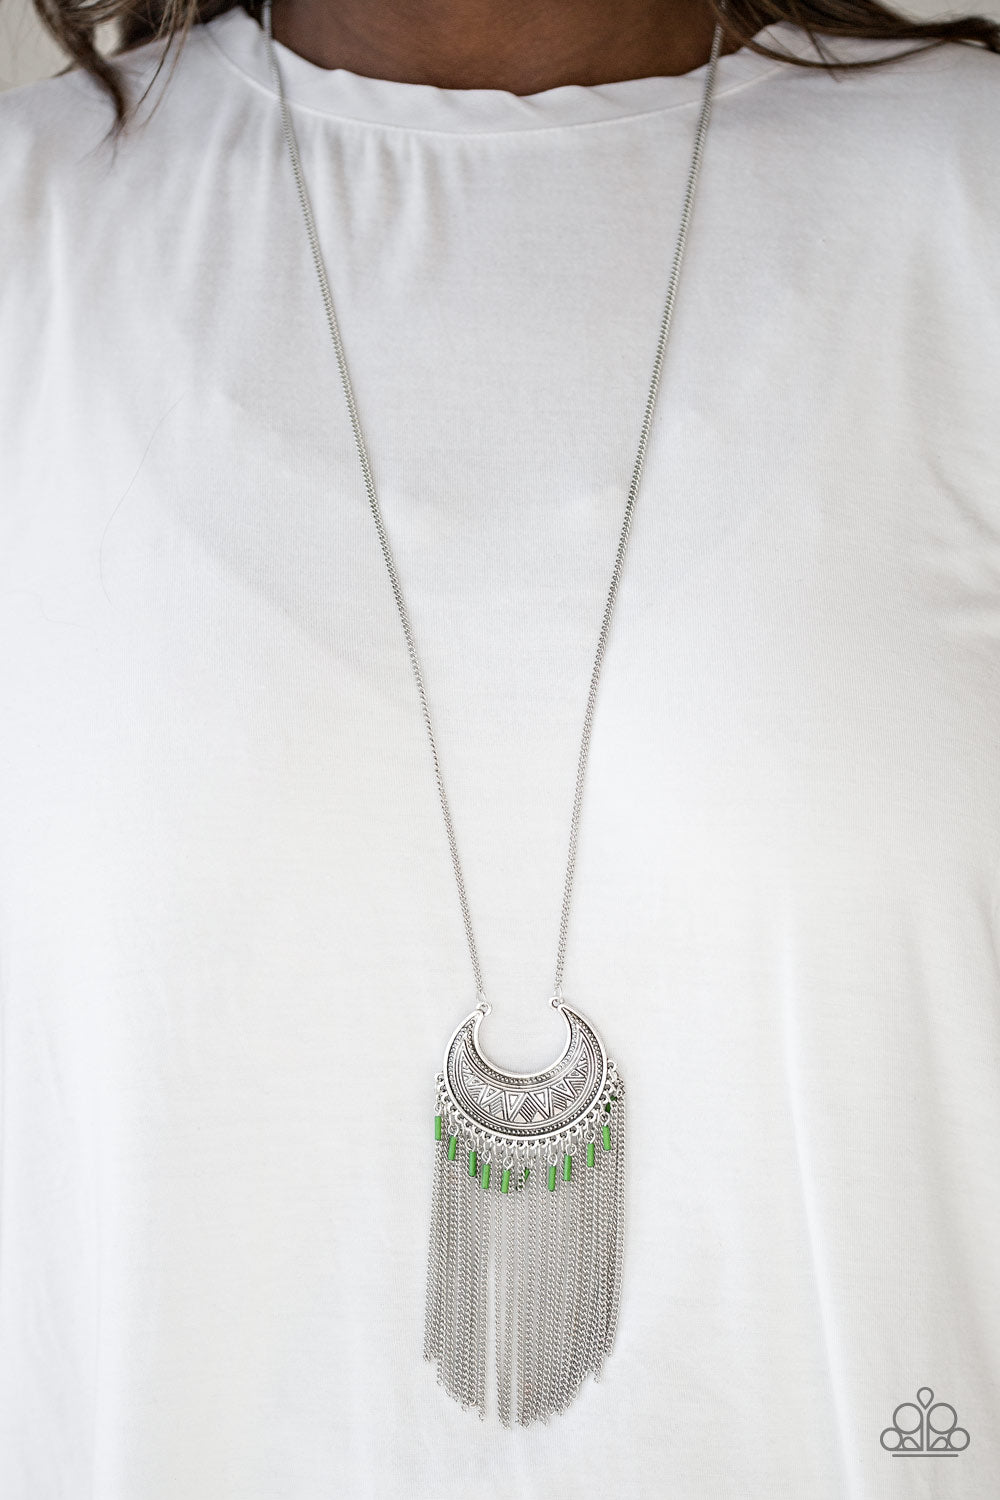 Desert Coyote - Green necklace set